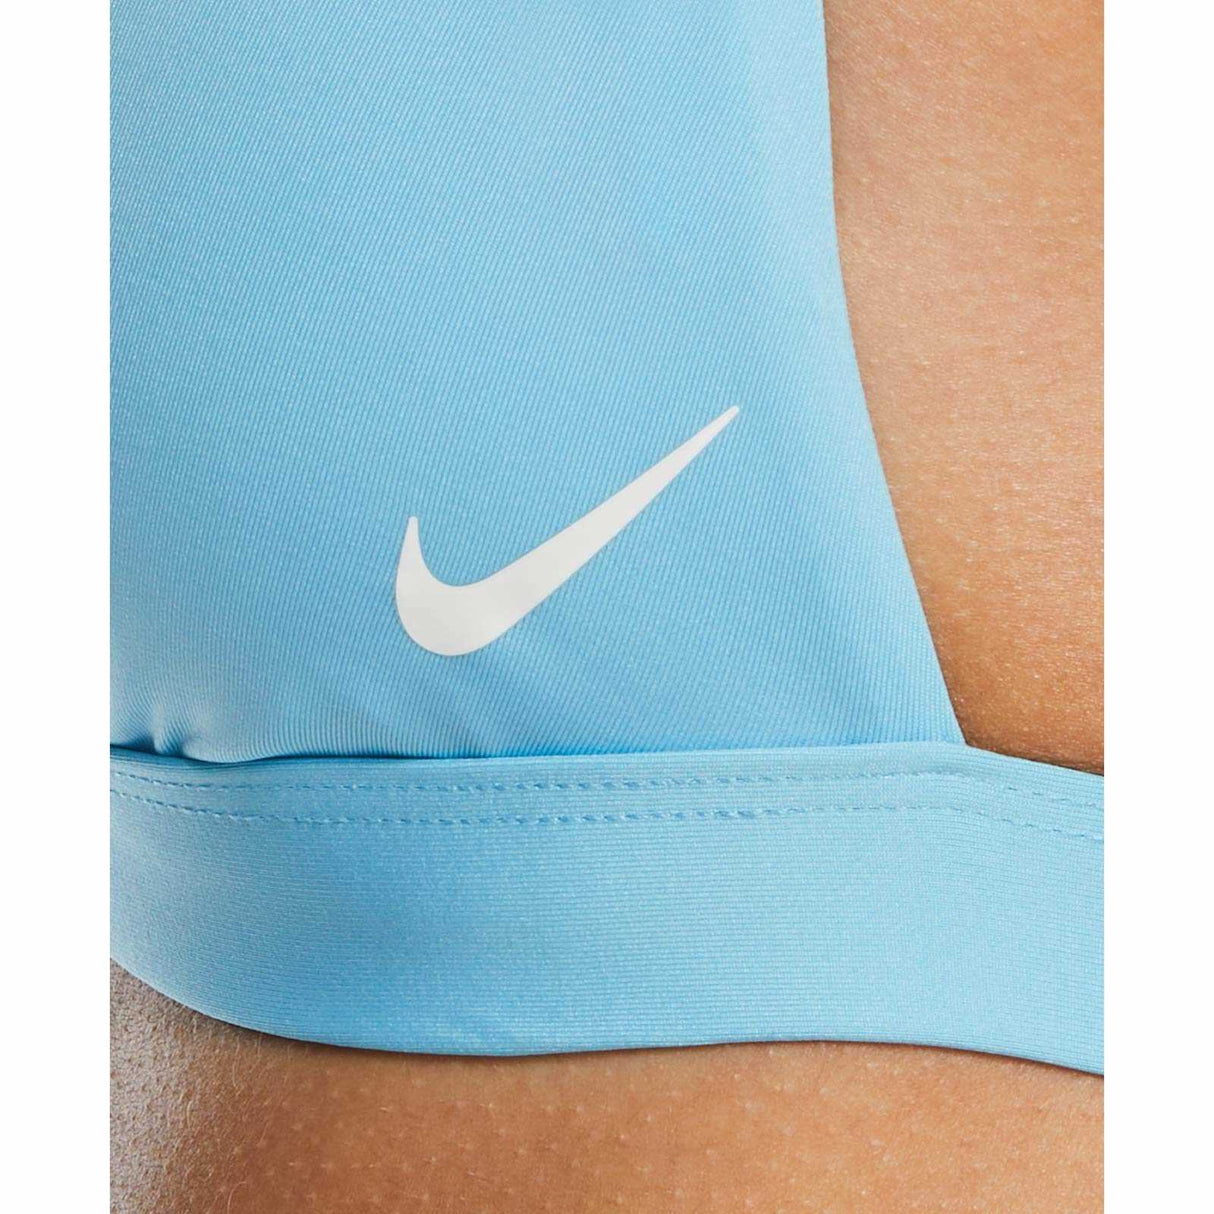 Nike Essential Womens Bralette Bikini Top